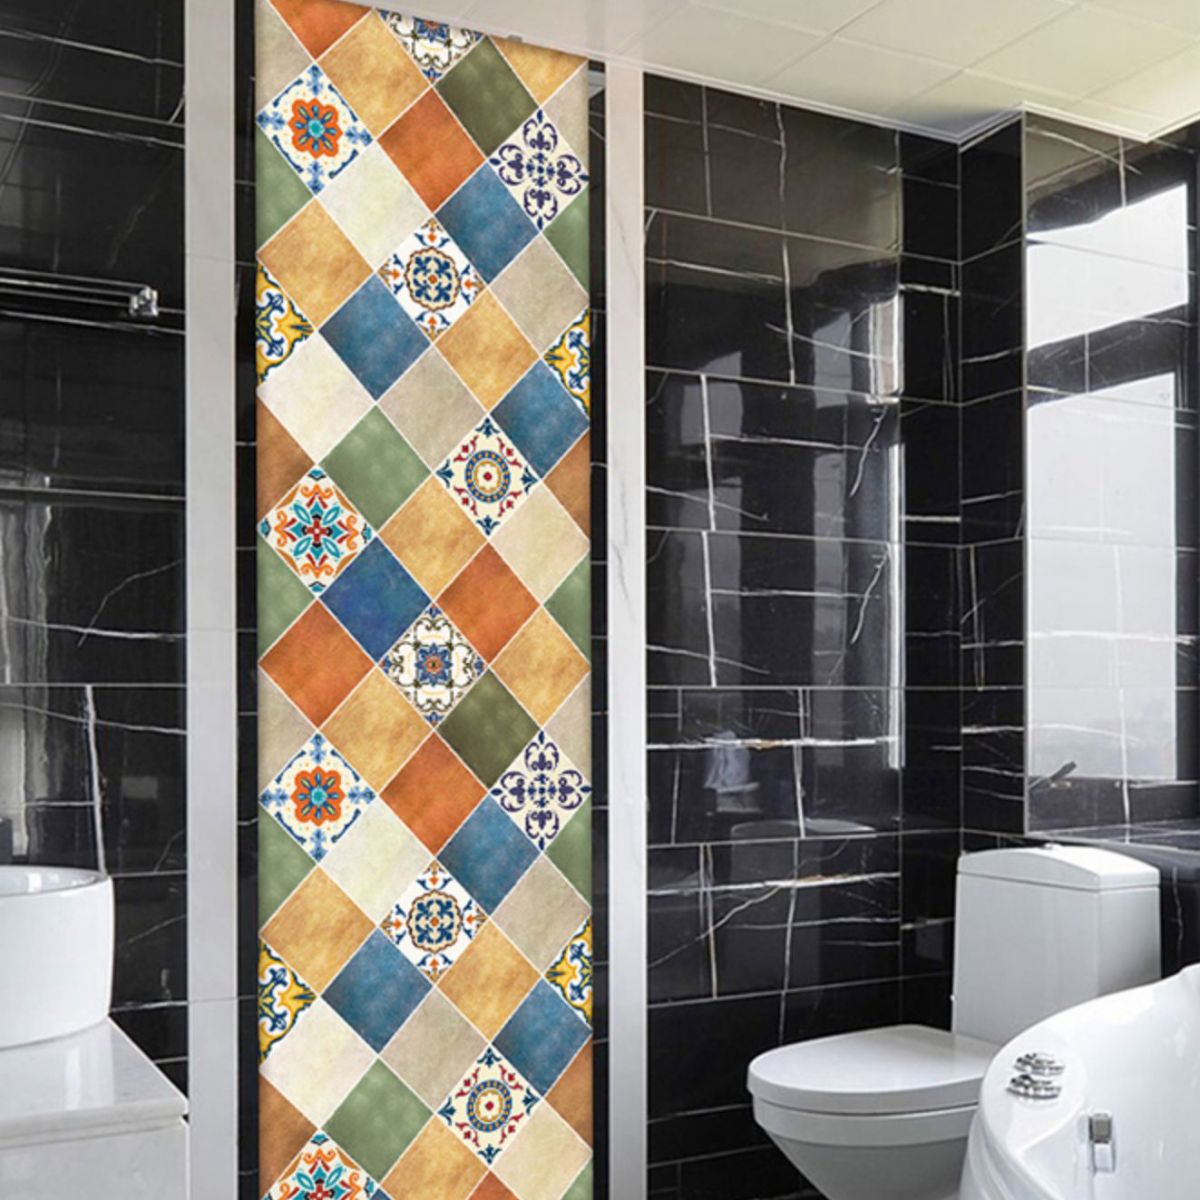 Mosaic Tile Peel and Stick Tiles Tile Modern Peel and Stick Backsplash